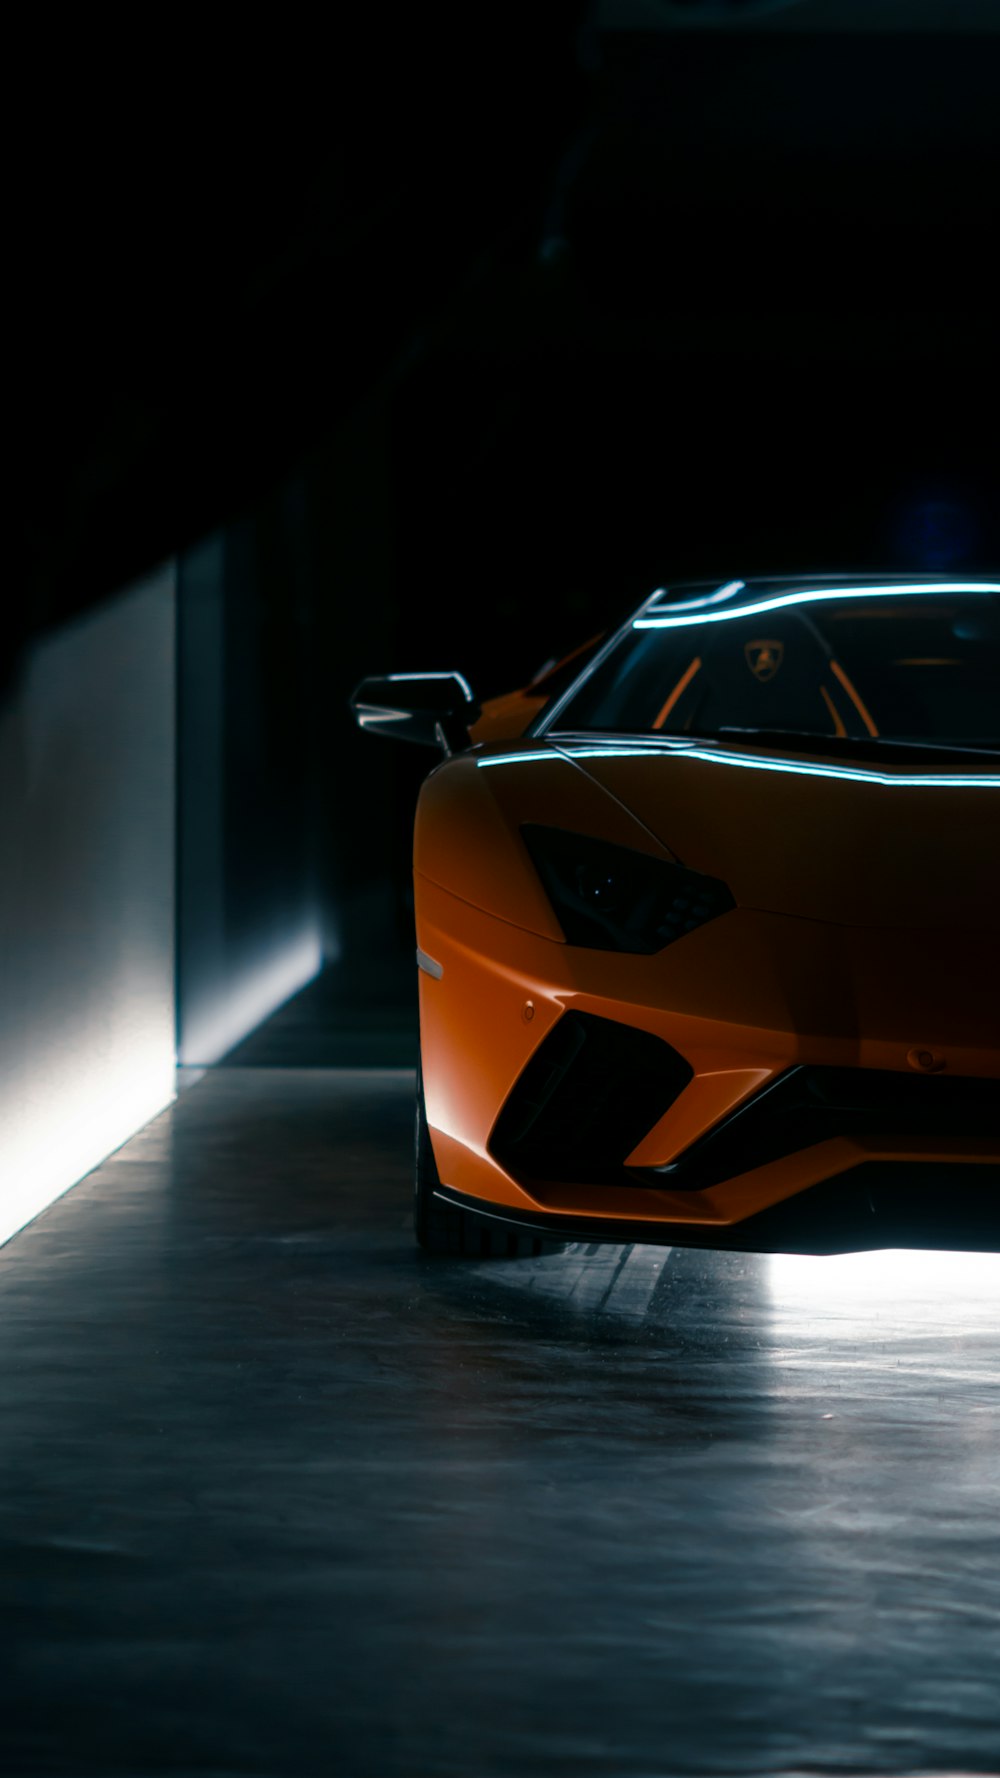 an orange sports car in a dimly lit room